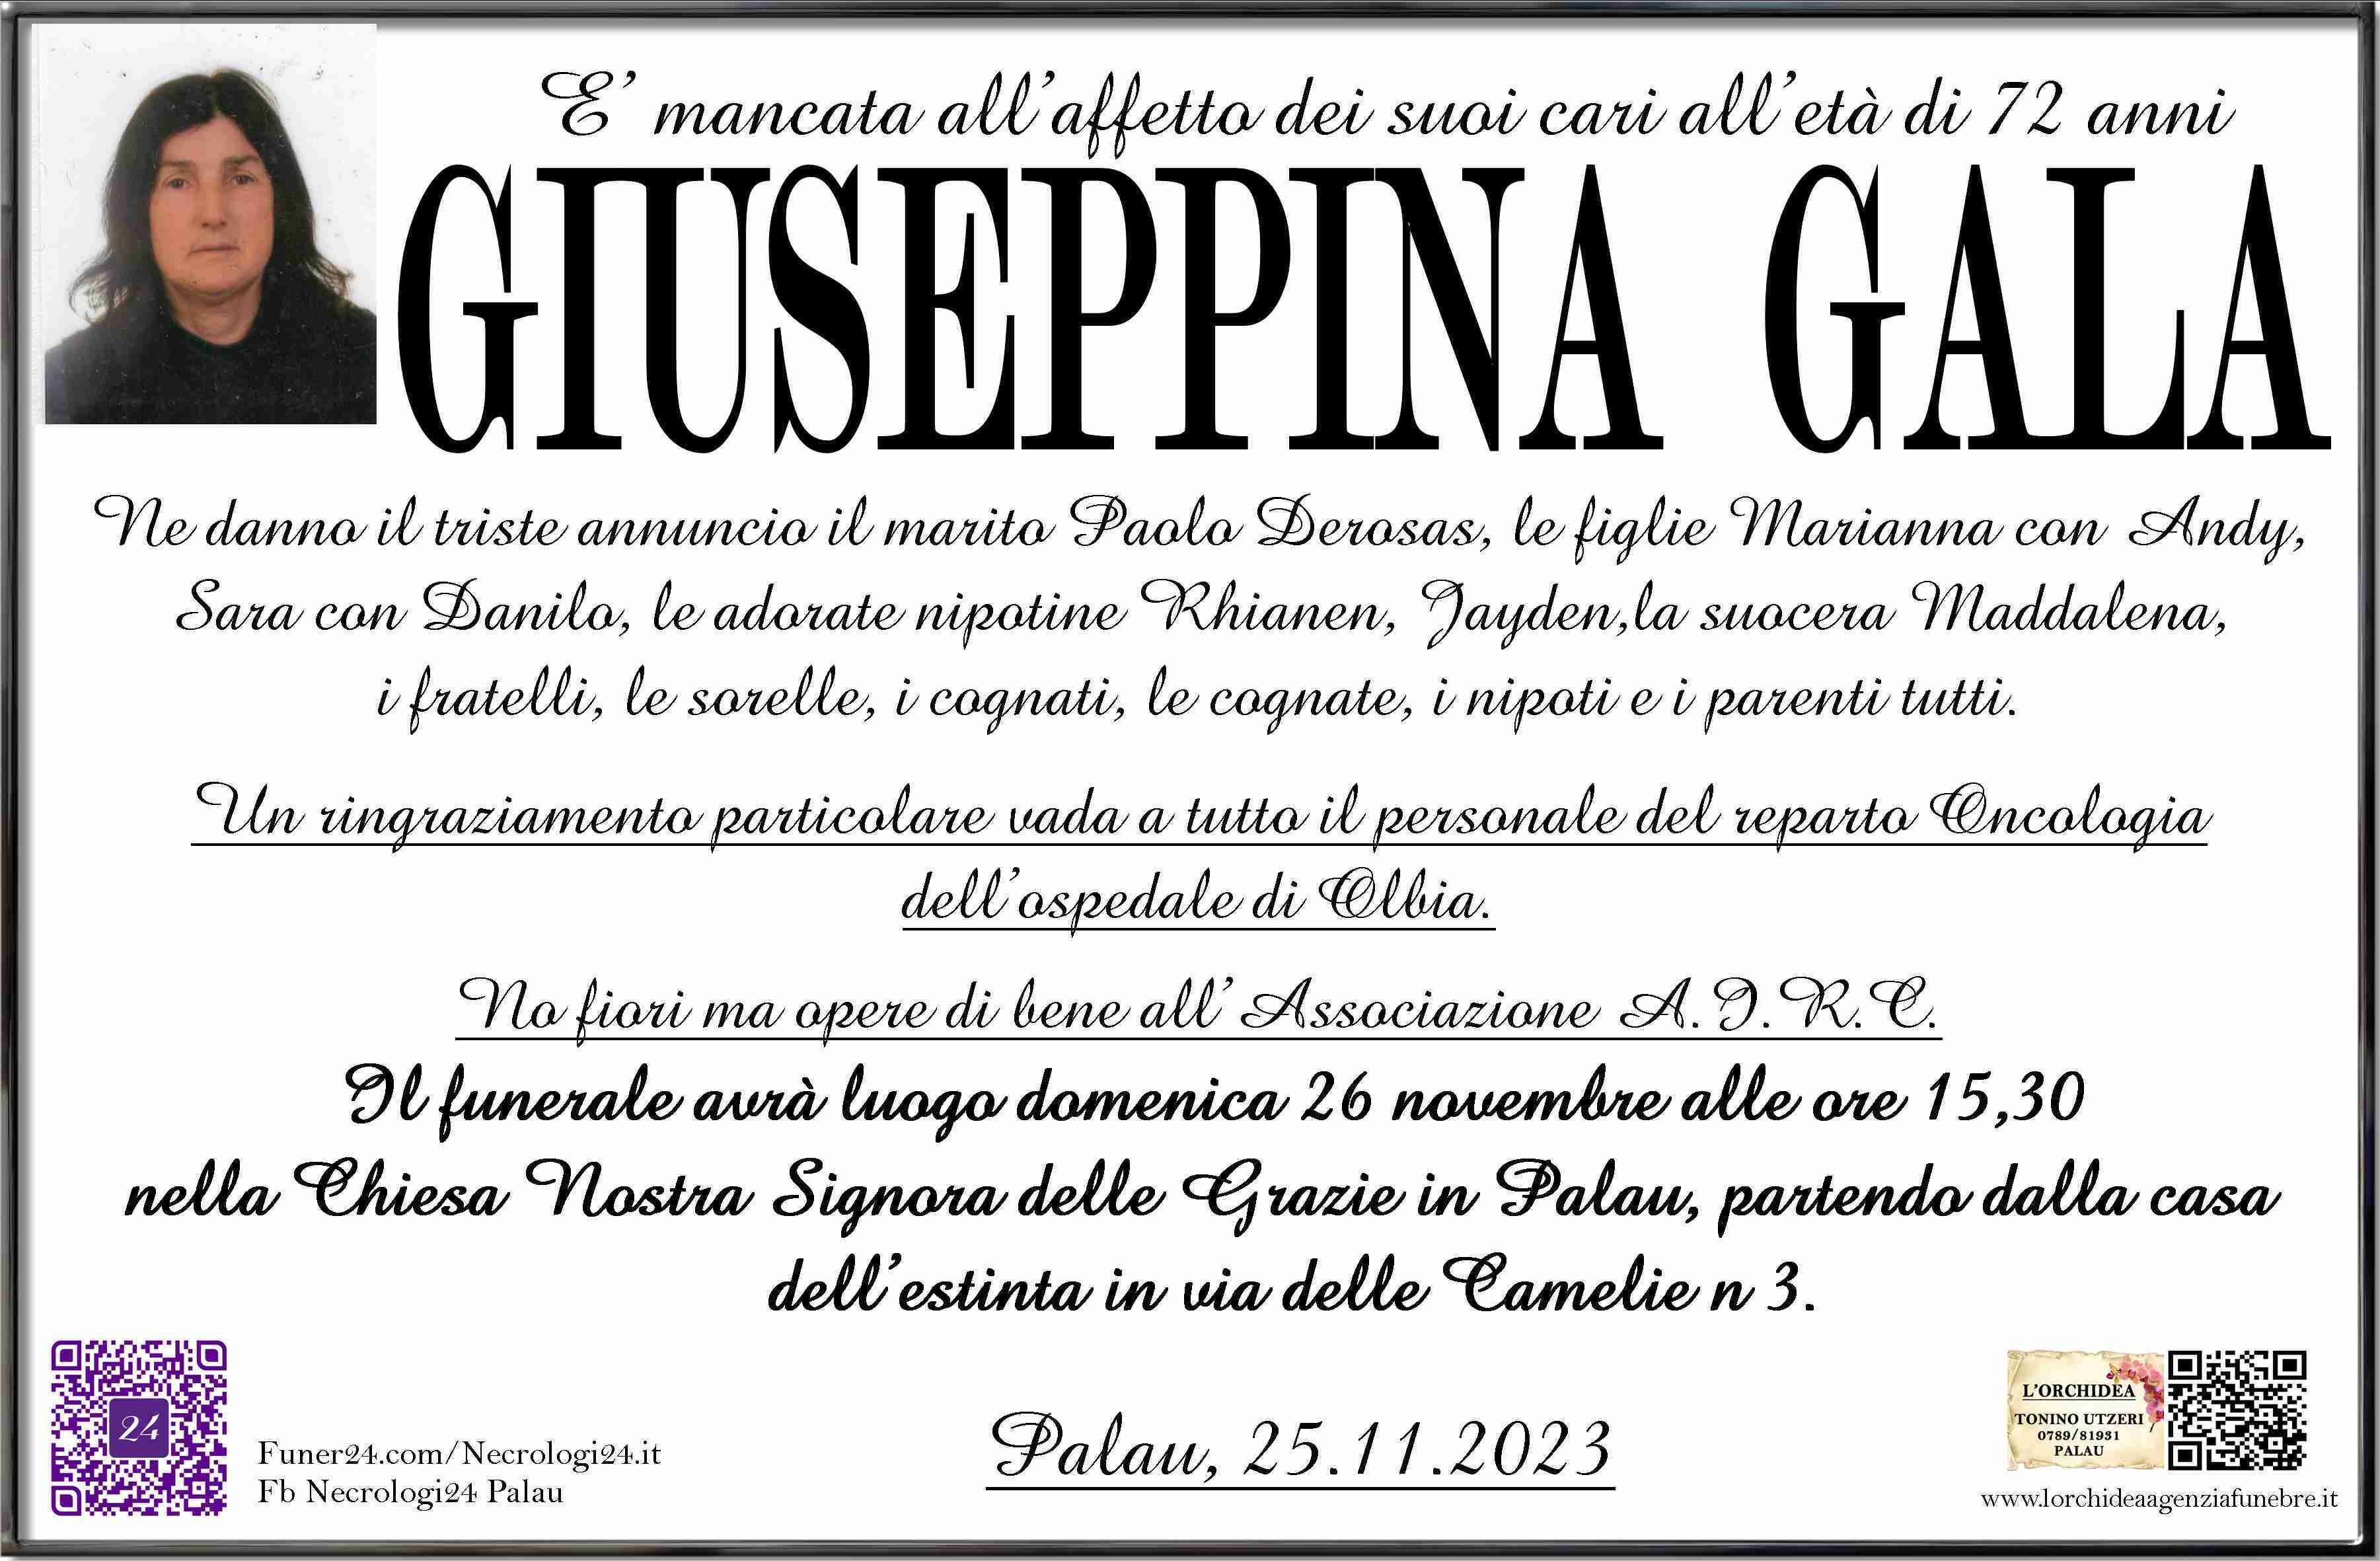 Giuseppina Gala